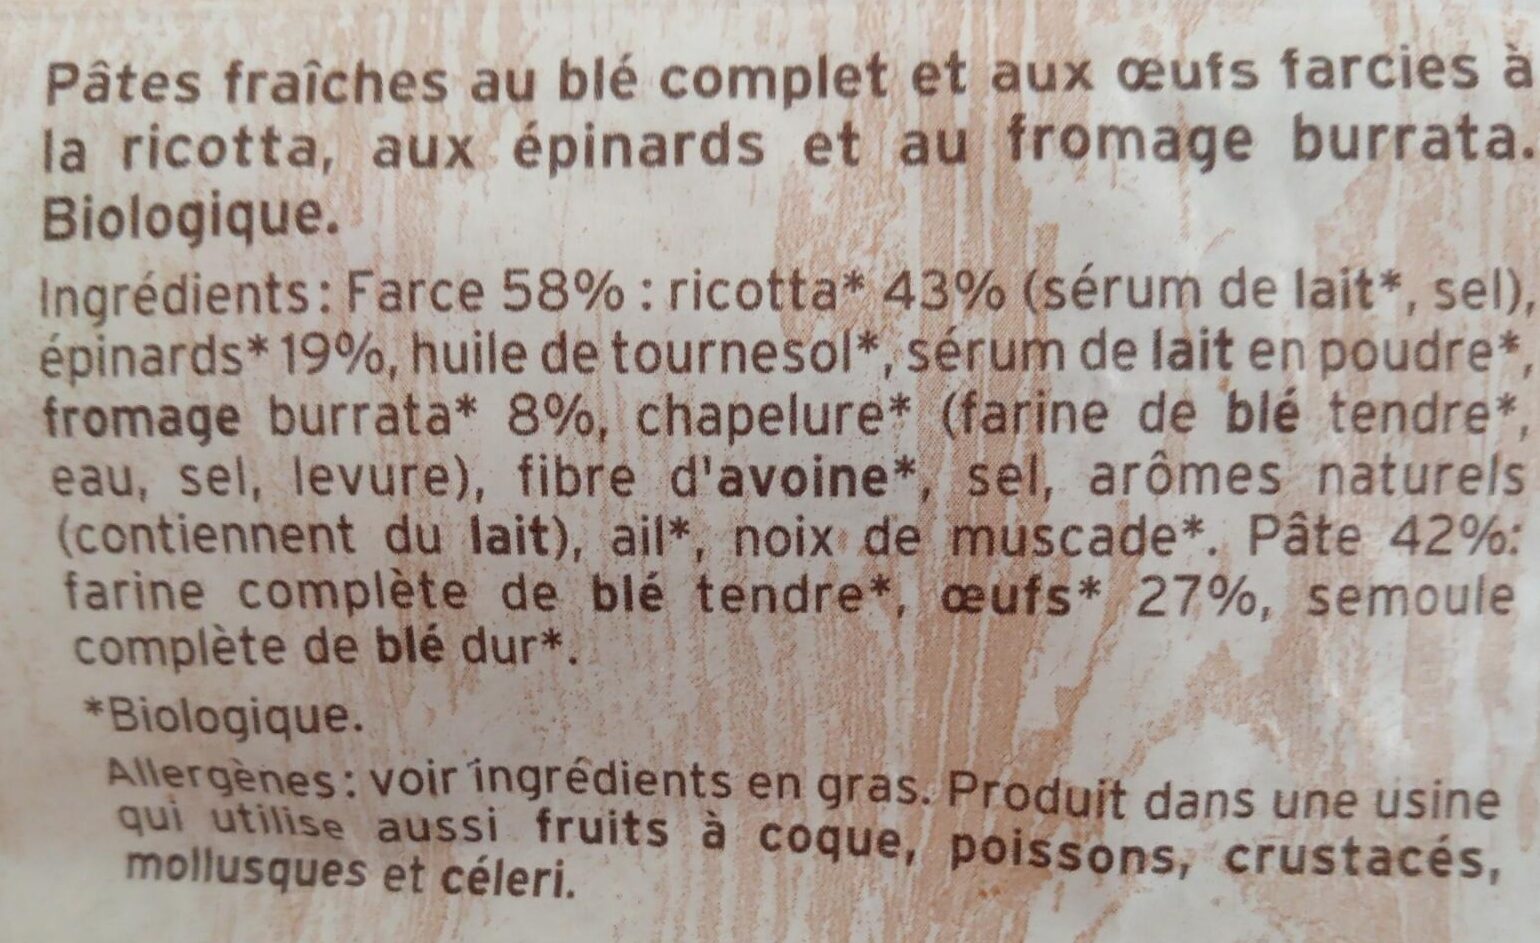 Ravioli bio au blé complet épinards ricotta burrata - Ingrediënten - fr